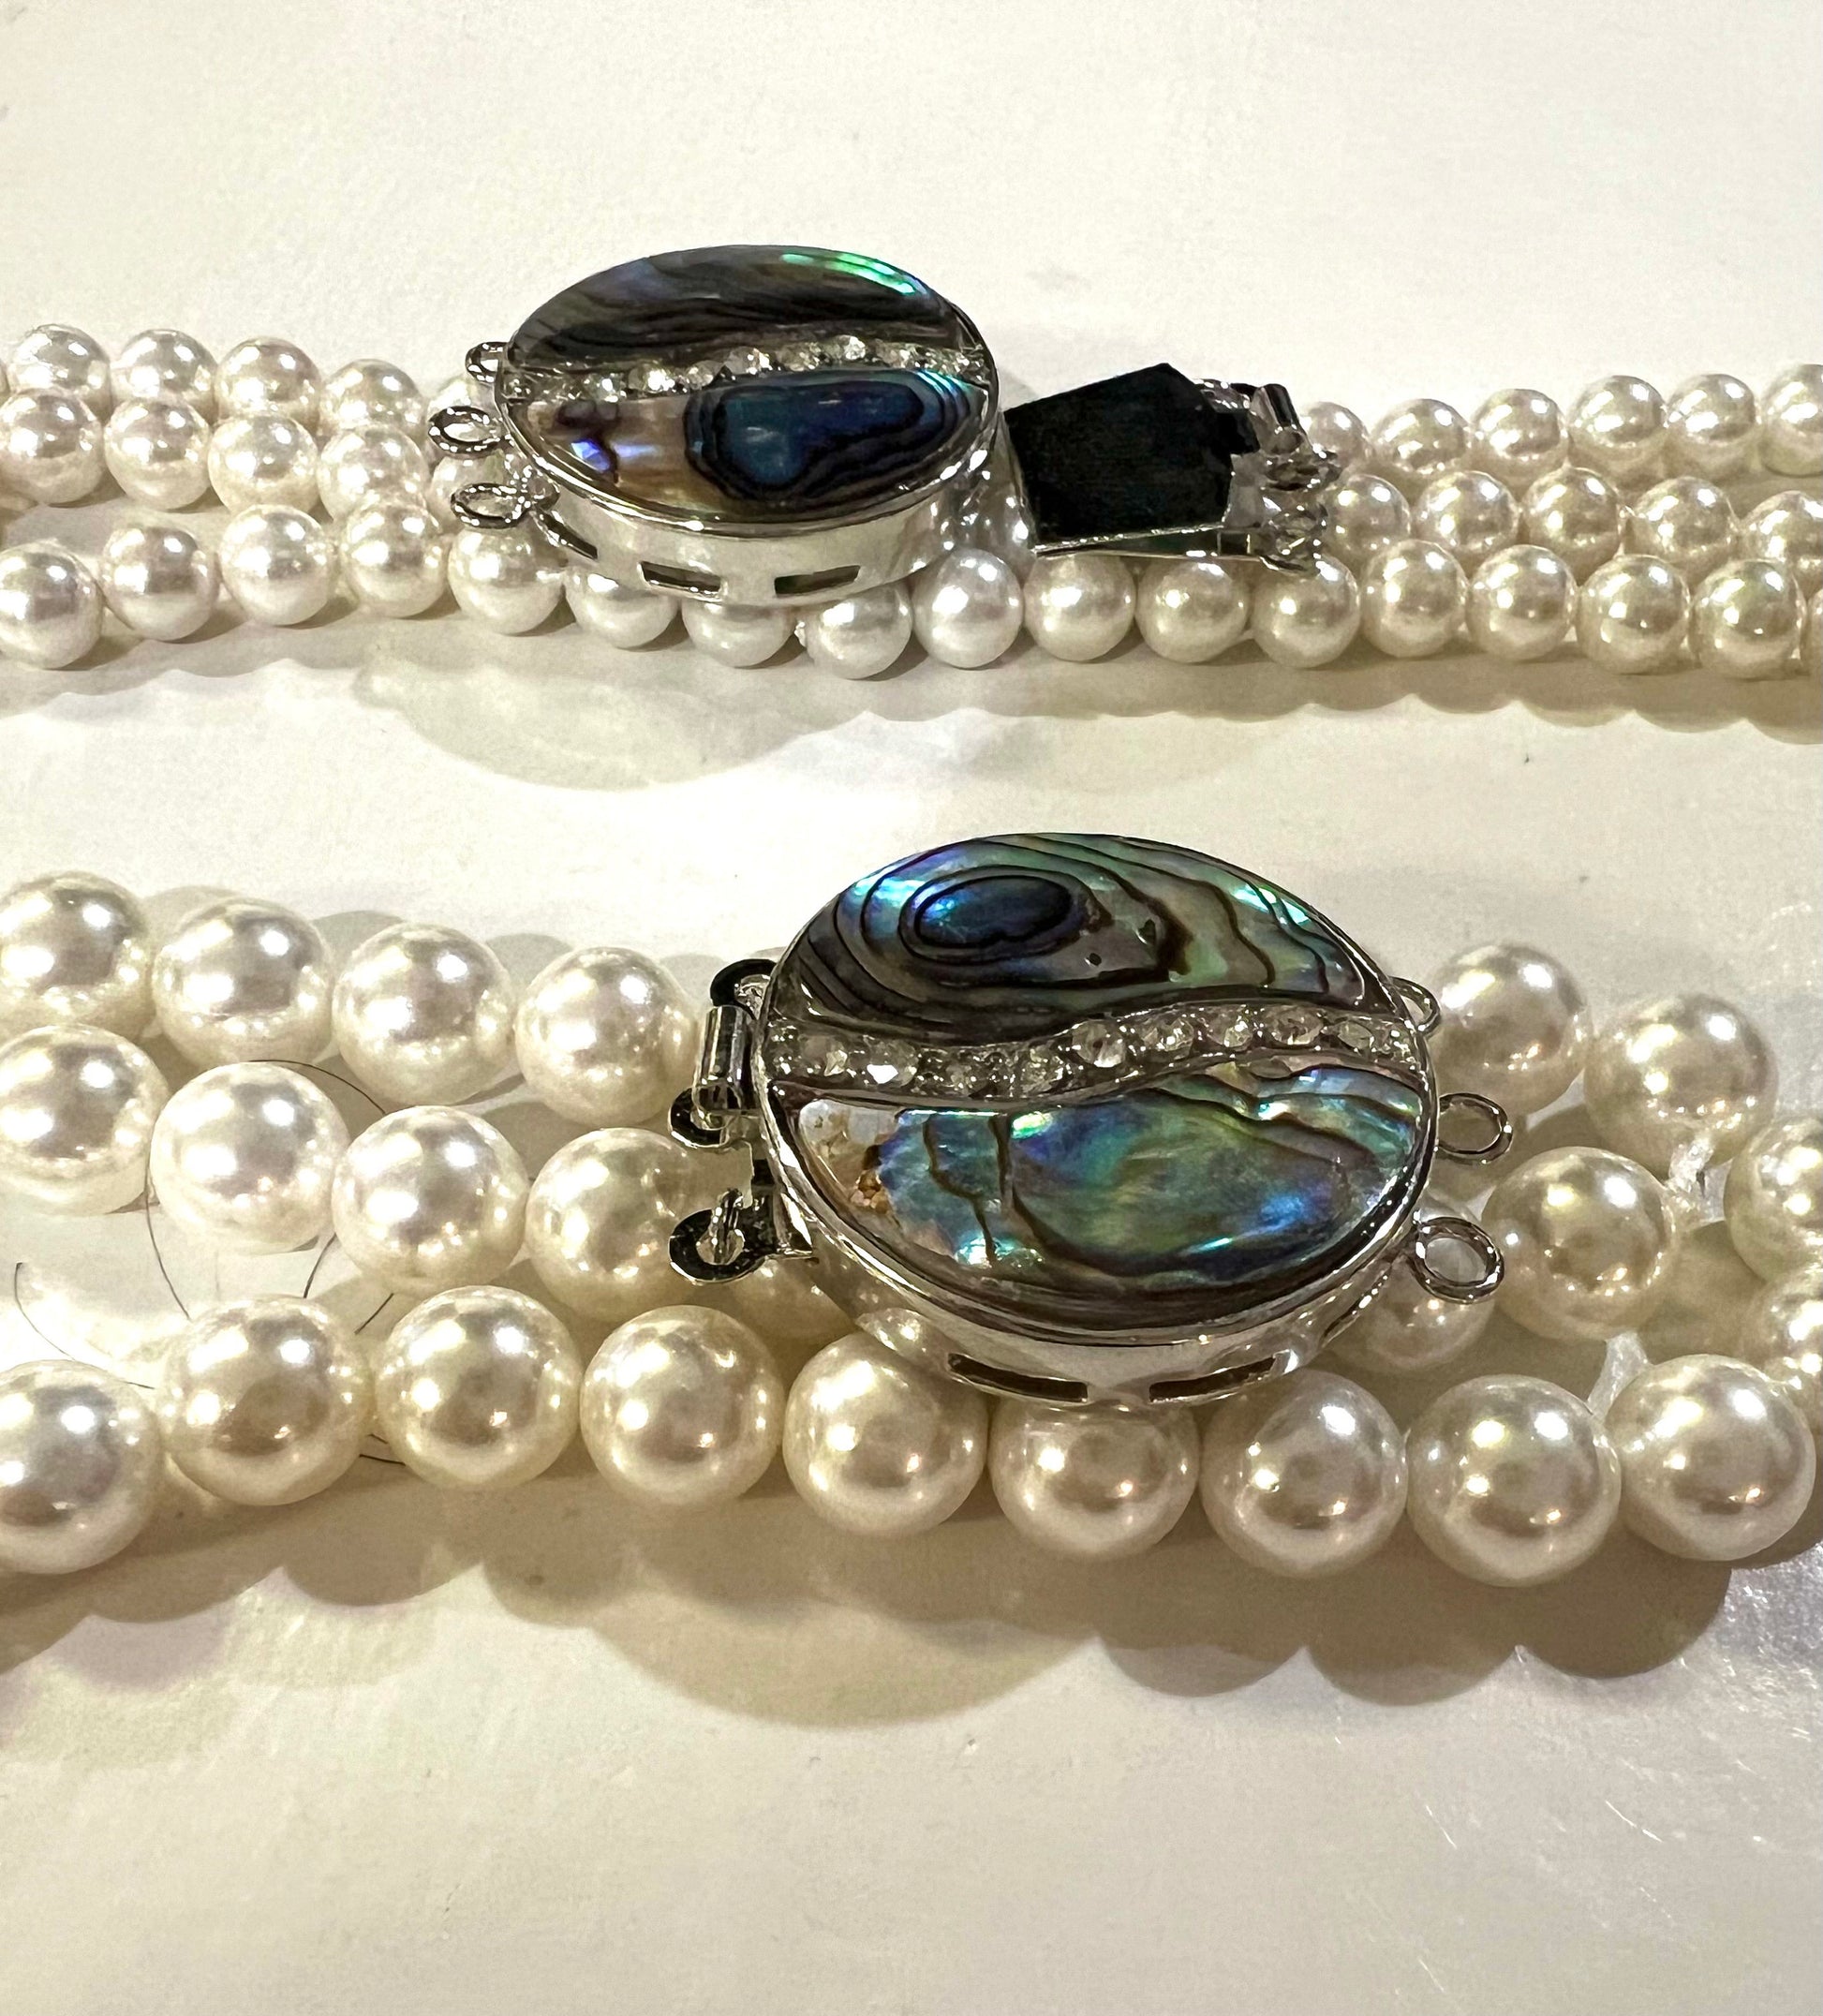 Abalony pua shell with rhinestone swirl setting 3 loop rhodium 27mm fancy clasp .Necklace bracelet jewelry making vintage clasp.1 piece